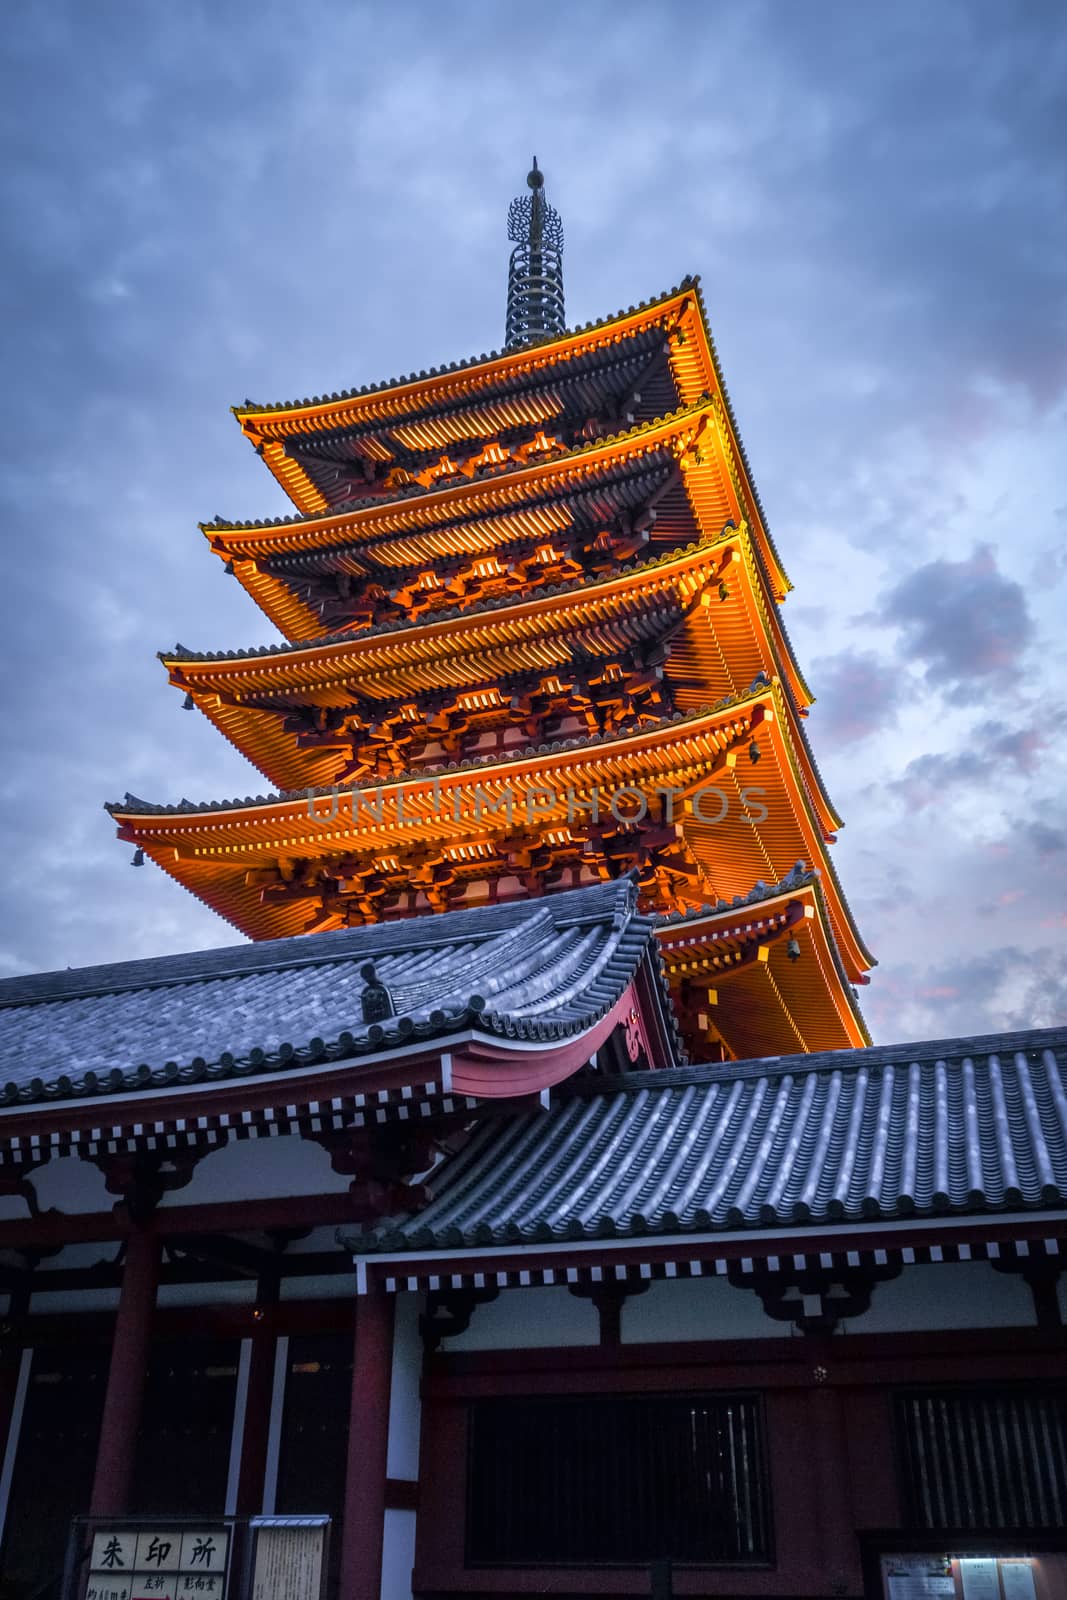 Pagoda at sunset in Senso-ji Kannon temple, Tokyo, Japan